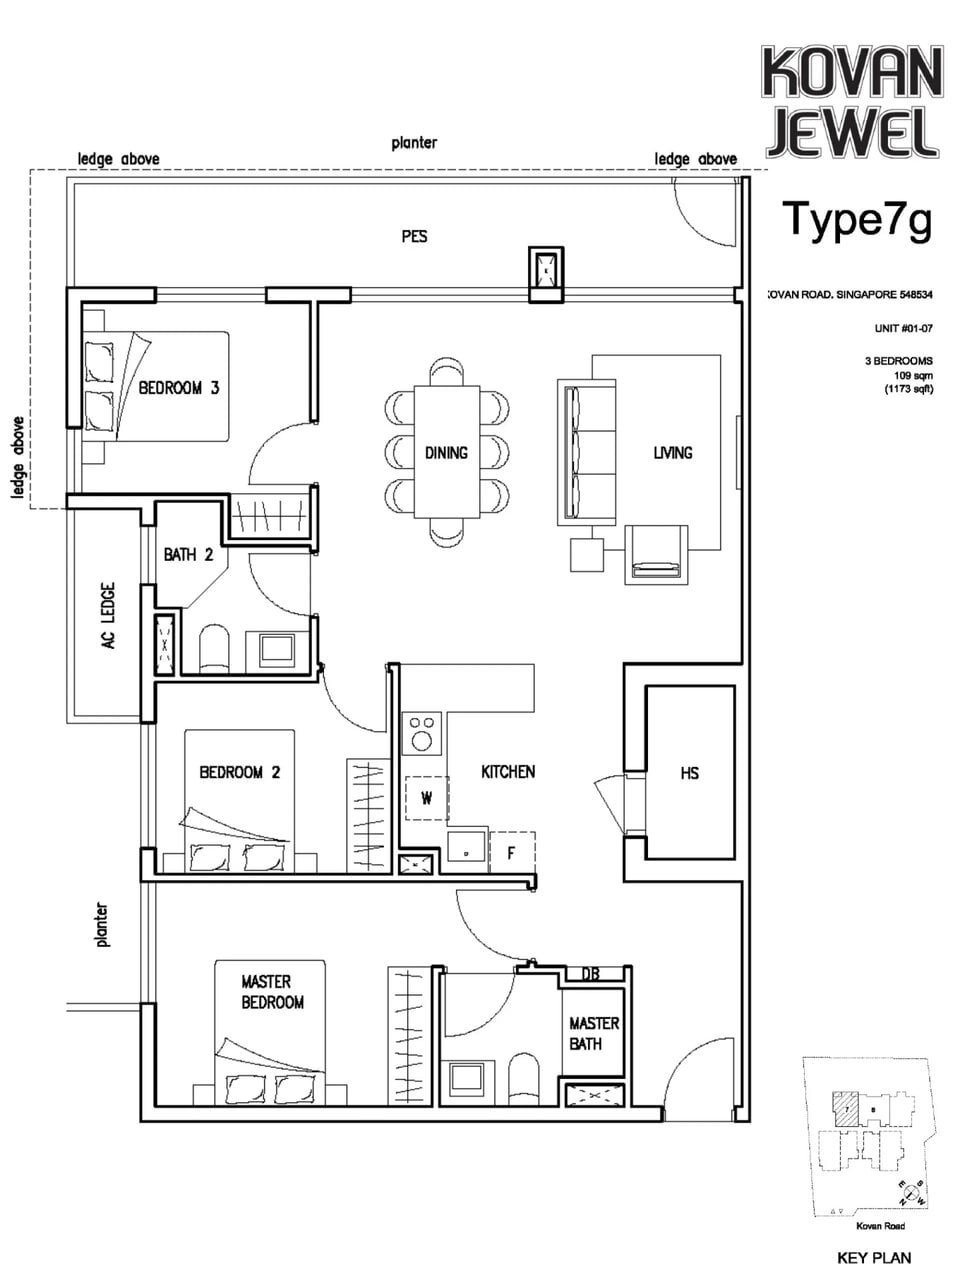 fp-kovan-jewel-family-7g-floor-plan.jpg